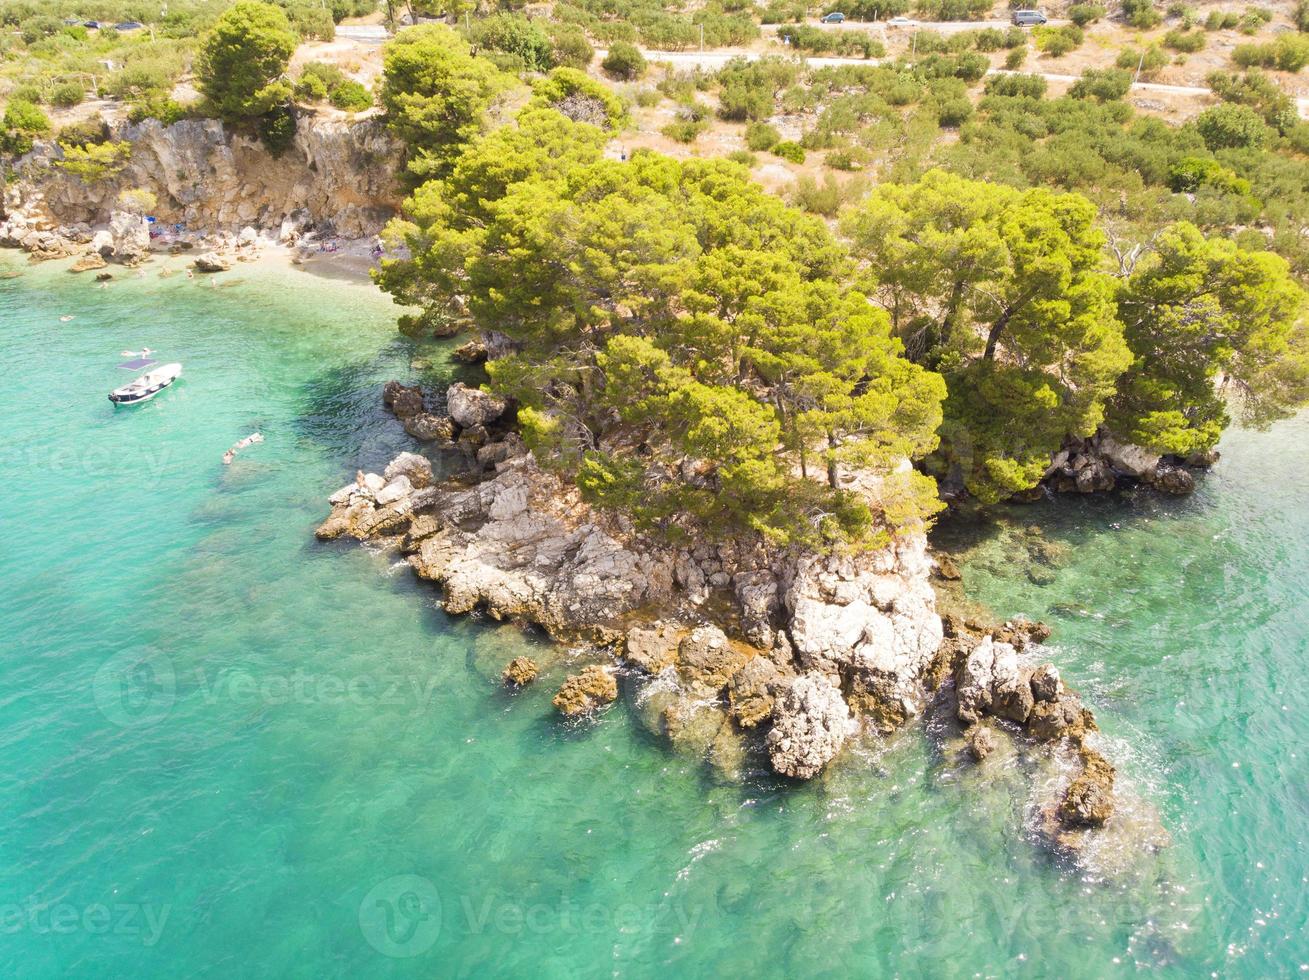 blauwe lagune, prachtige baai in de buurt van podgora makarska riviera kroatië foto